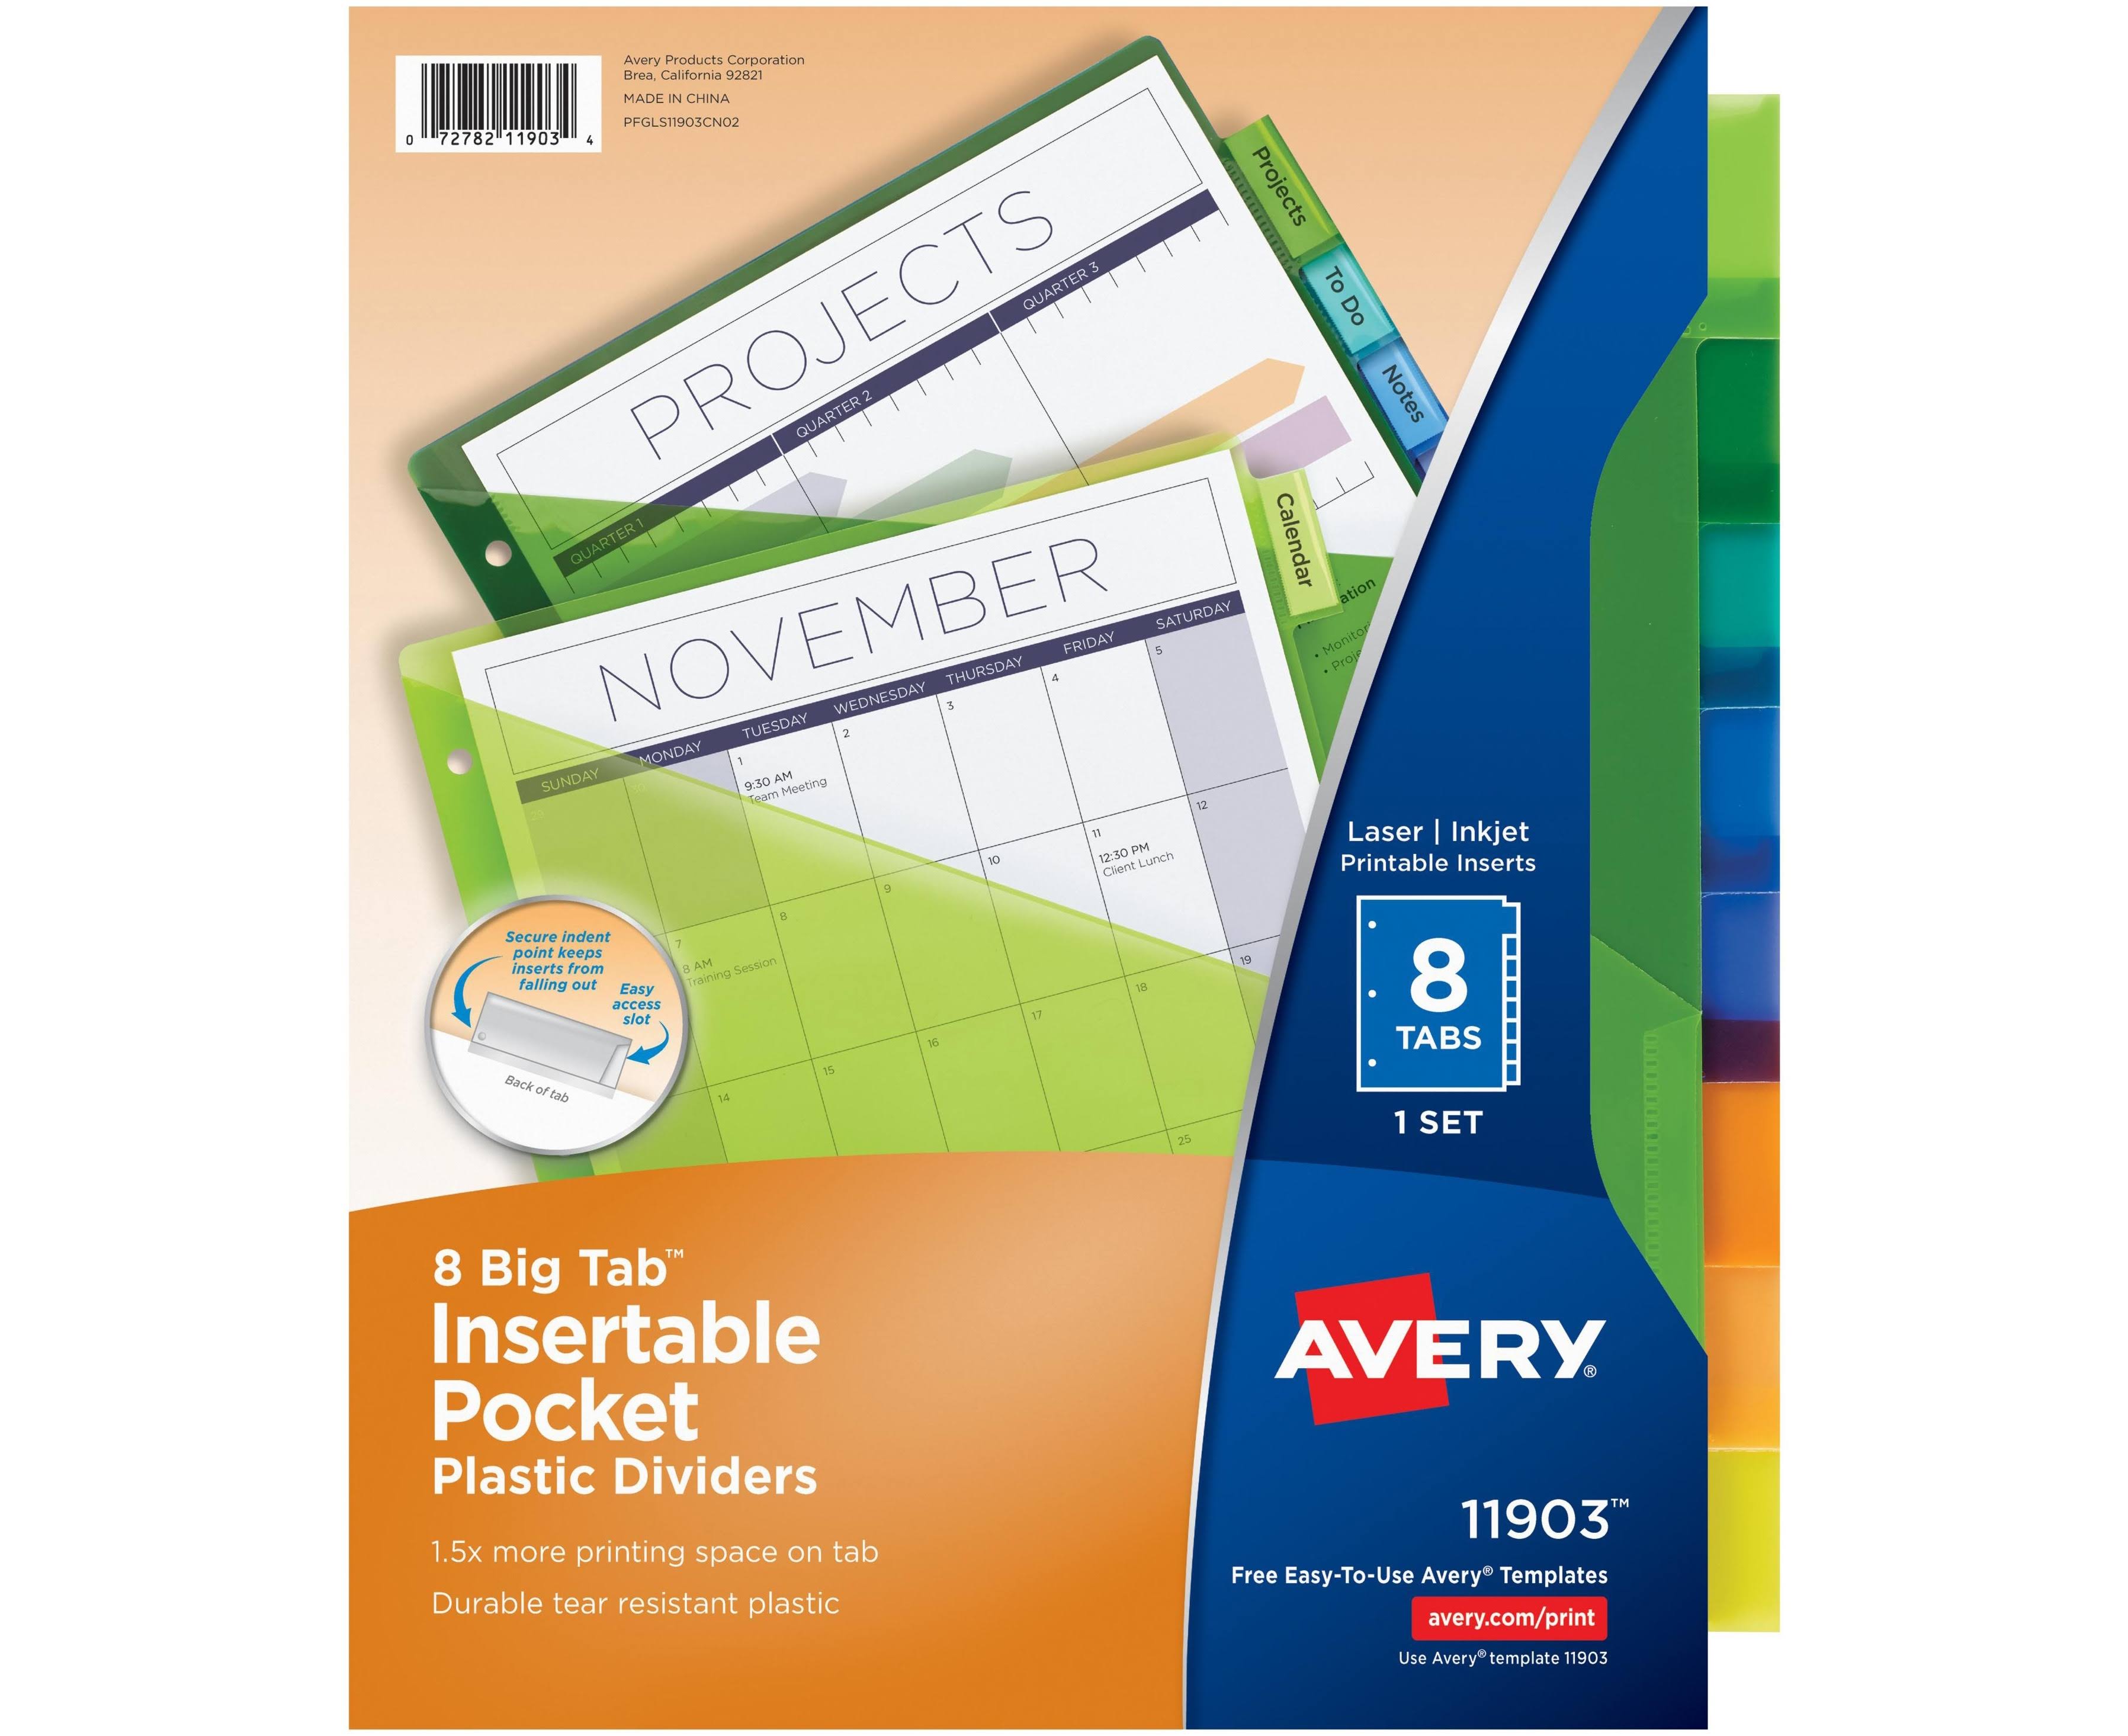 Avery Big Tab 11903 Insertable Pocket Plastic Dividers - 8ct